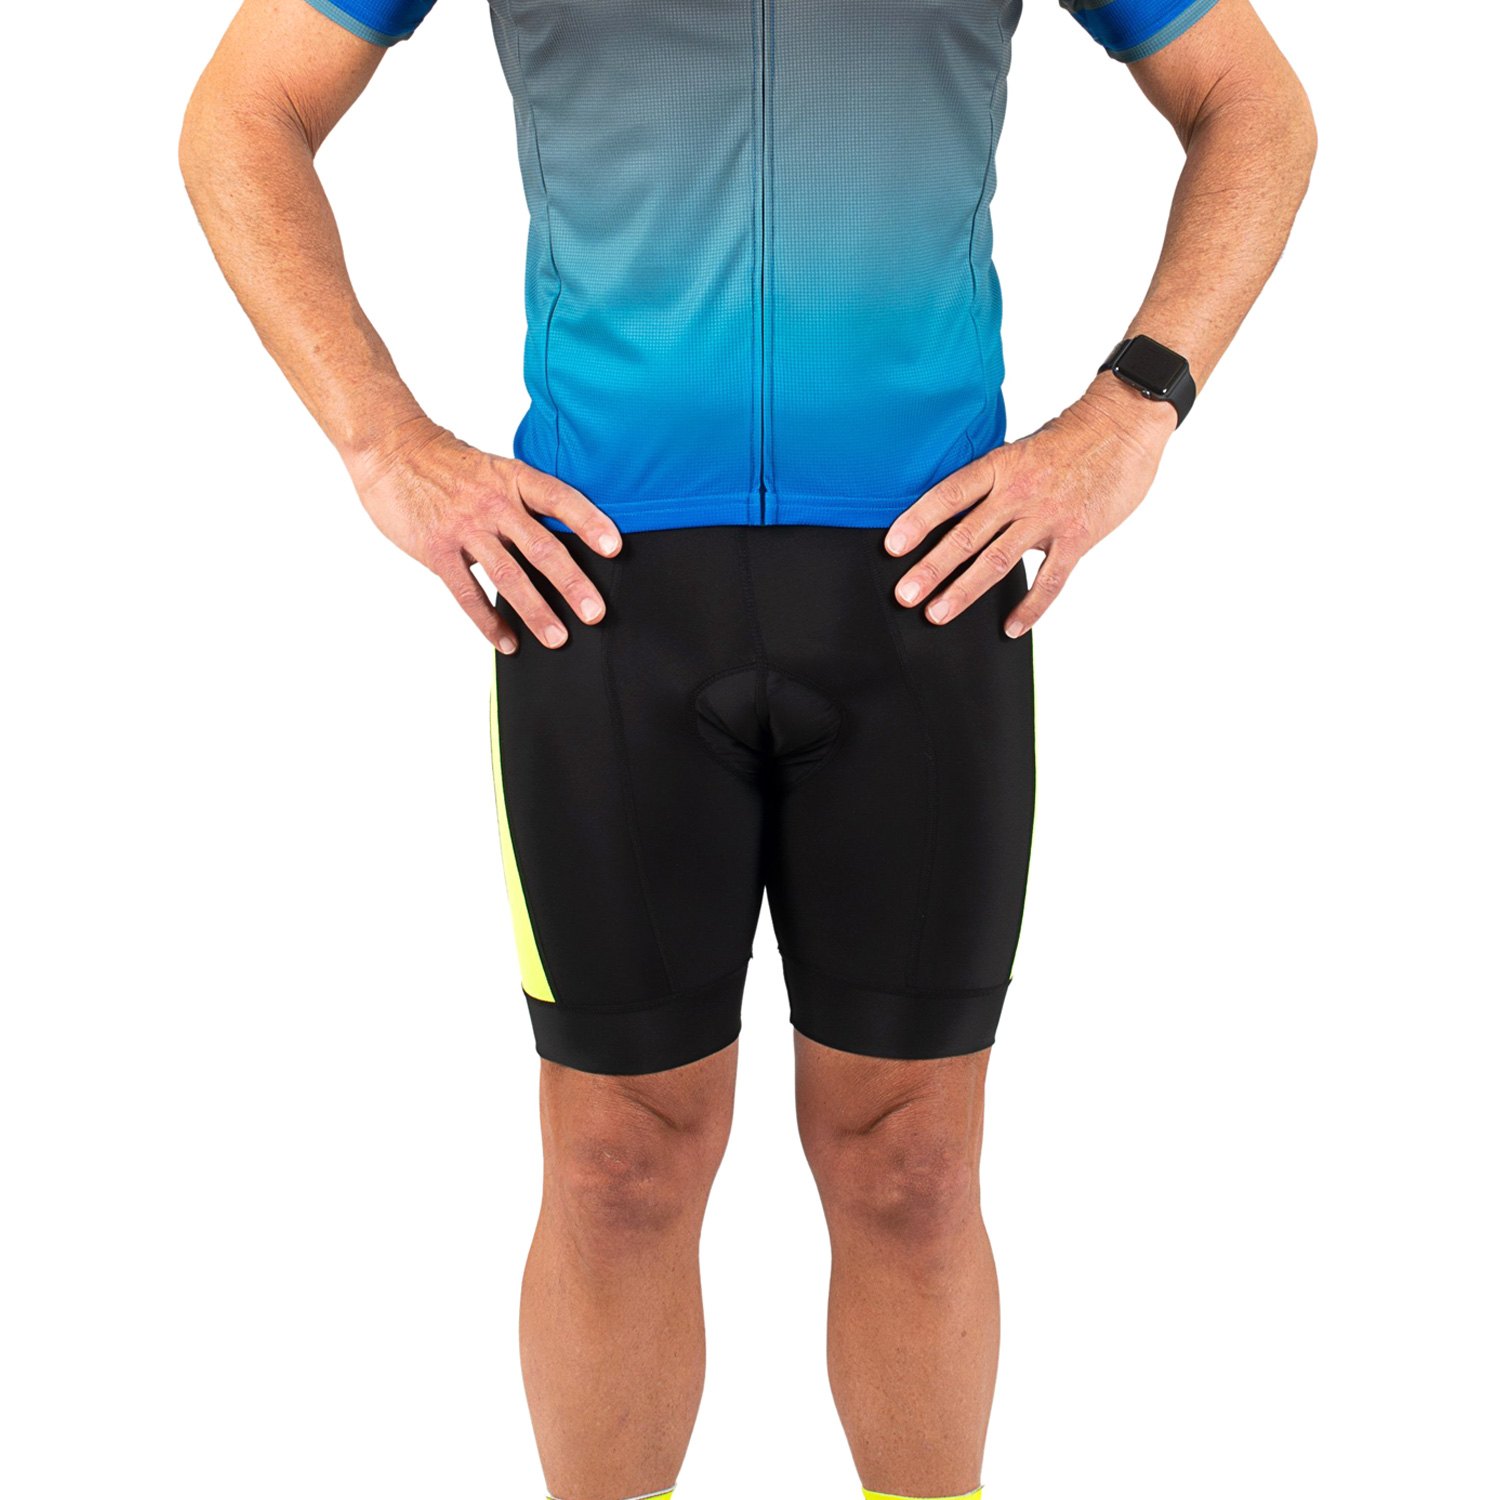 Canari Cycling Shorts Size Chart